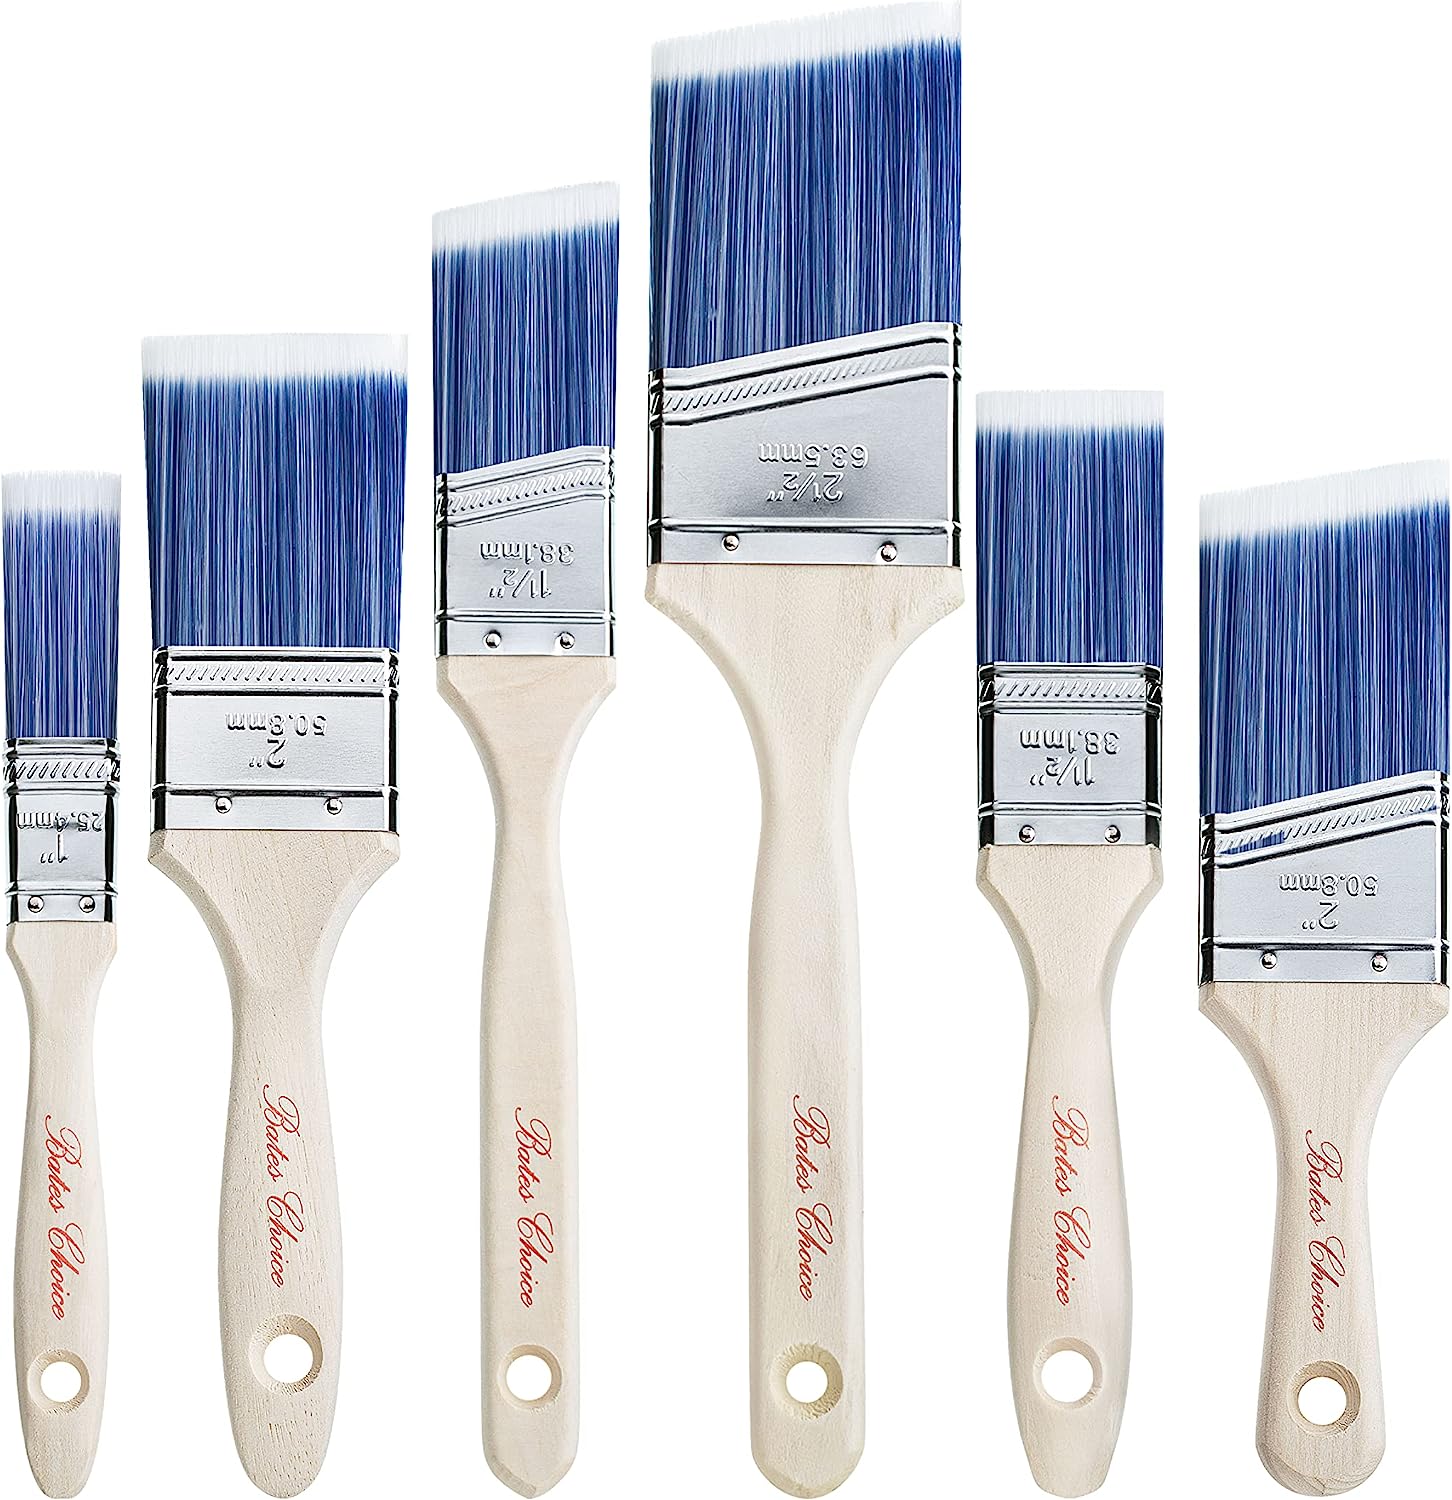 Bates- Paint Brushes, 6 Pack, Treated Wood Handle, [...]